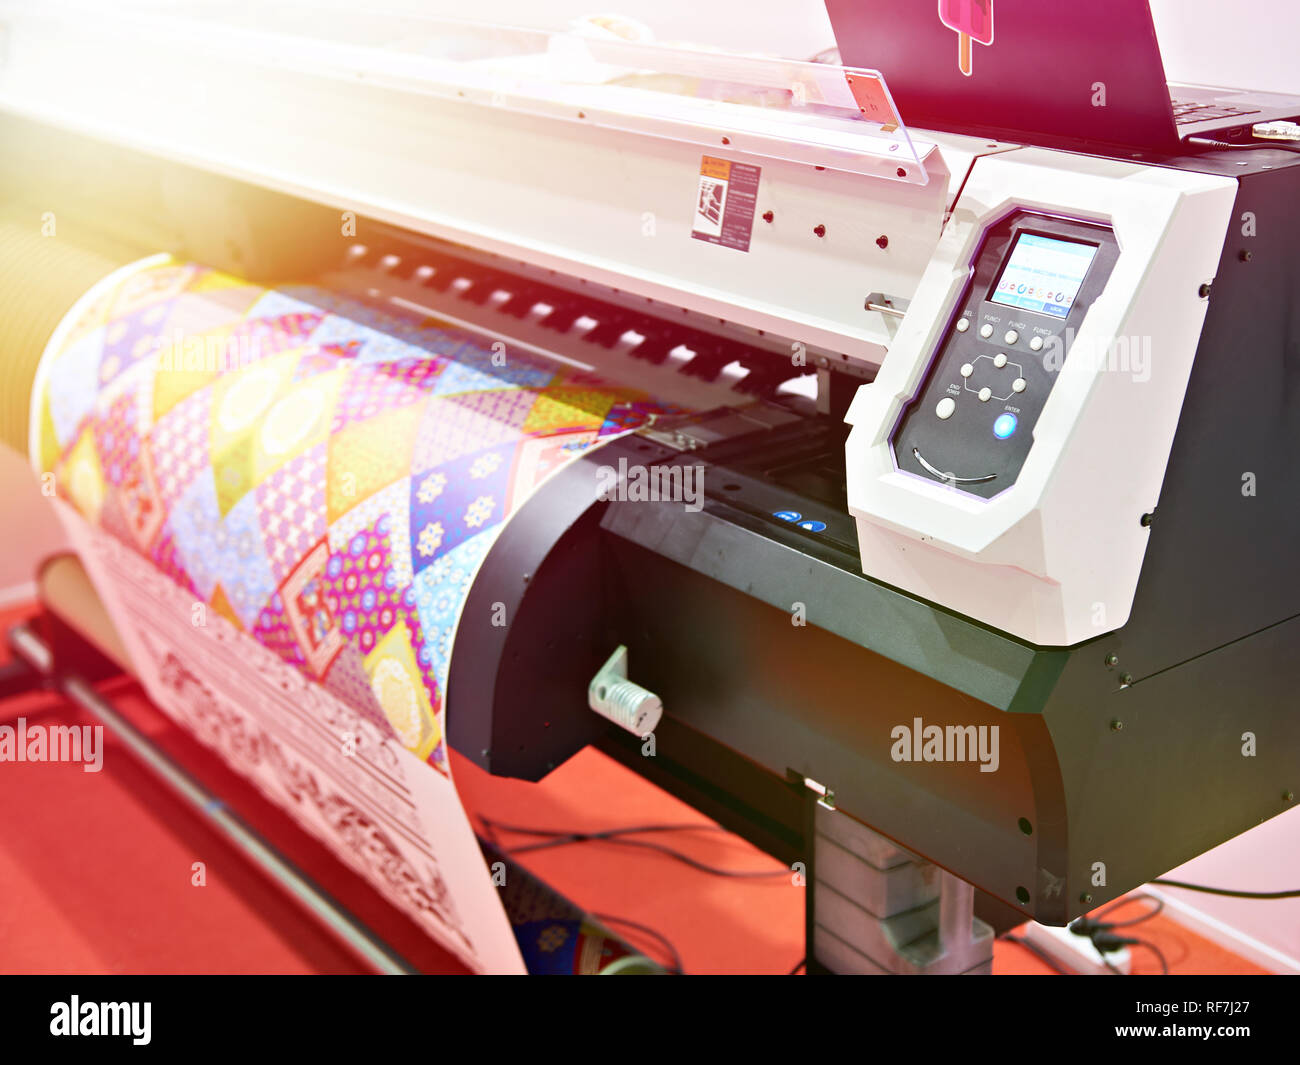 Big plotter printer with LED control panel Stock Photo